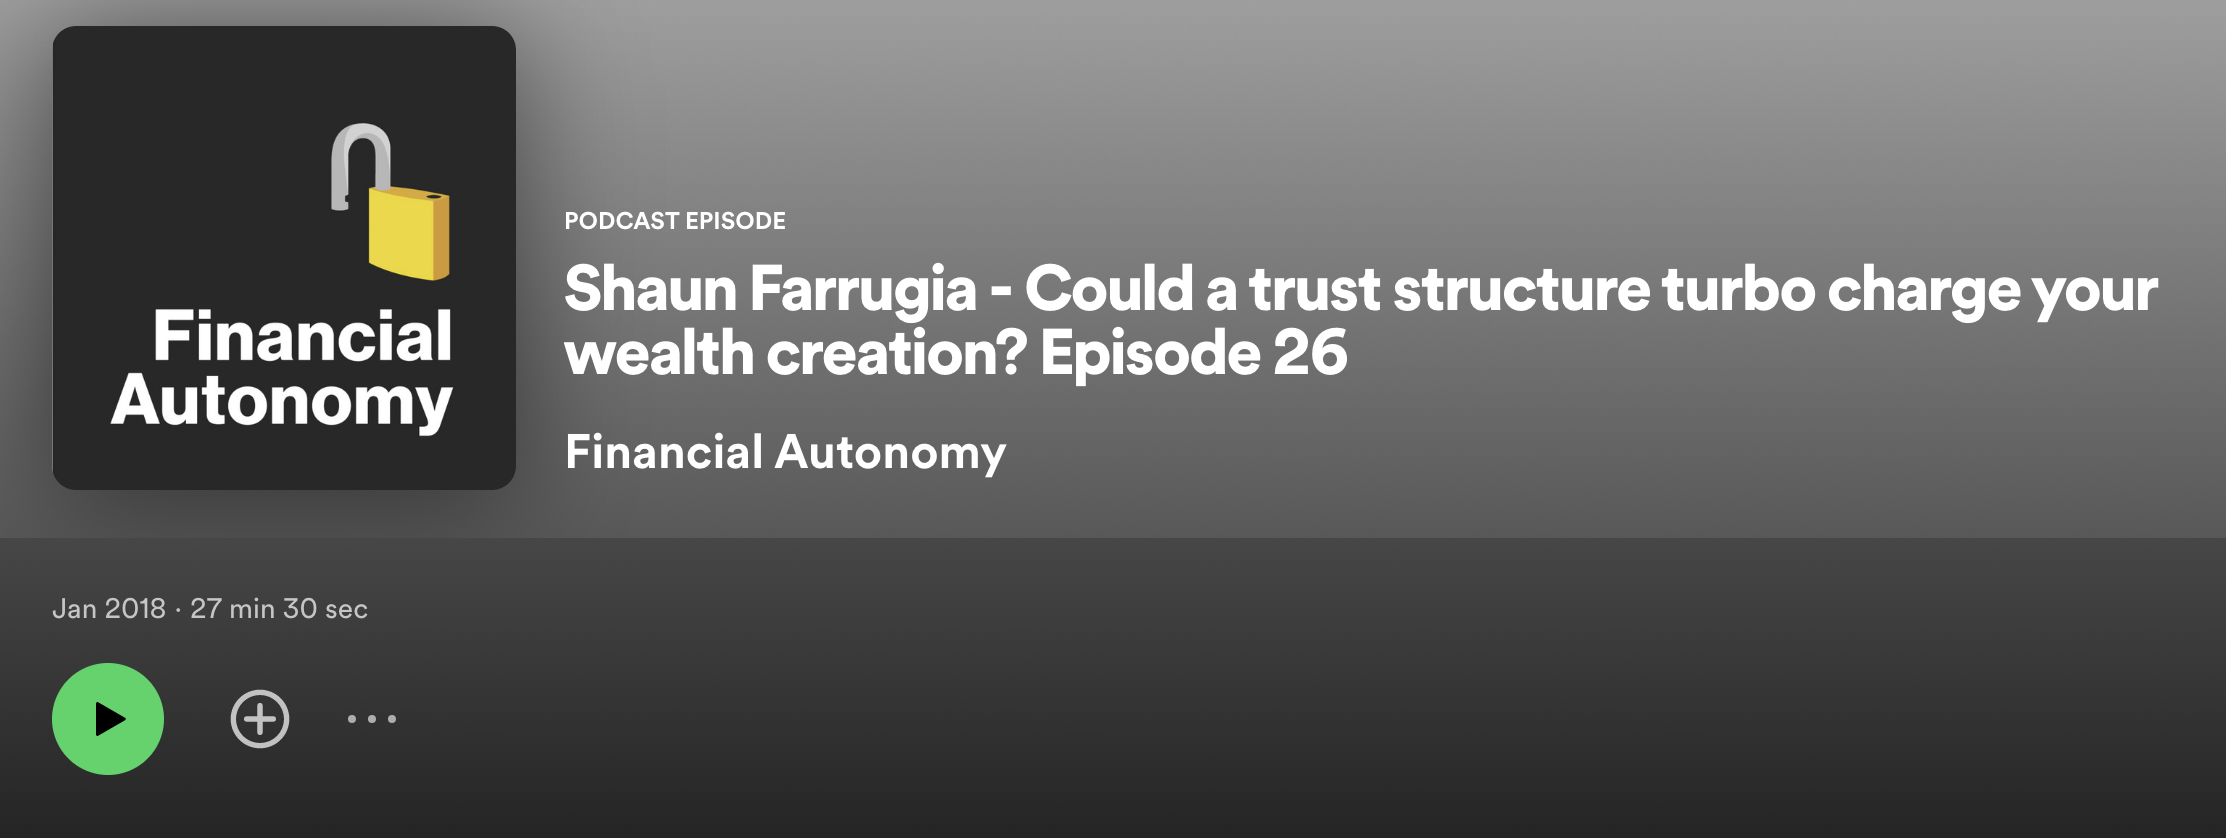 Financial Autonomy podcast